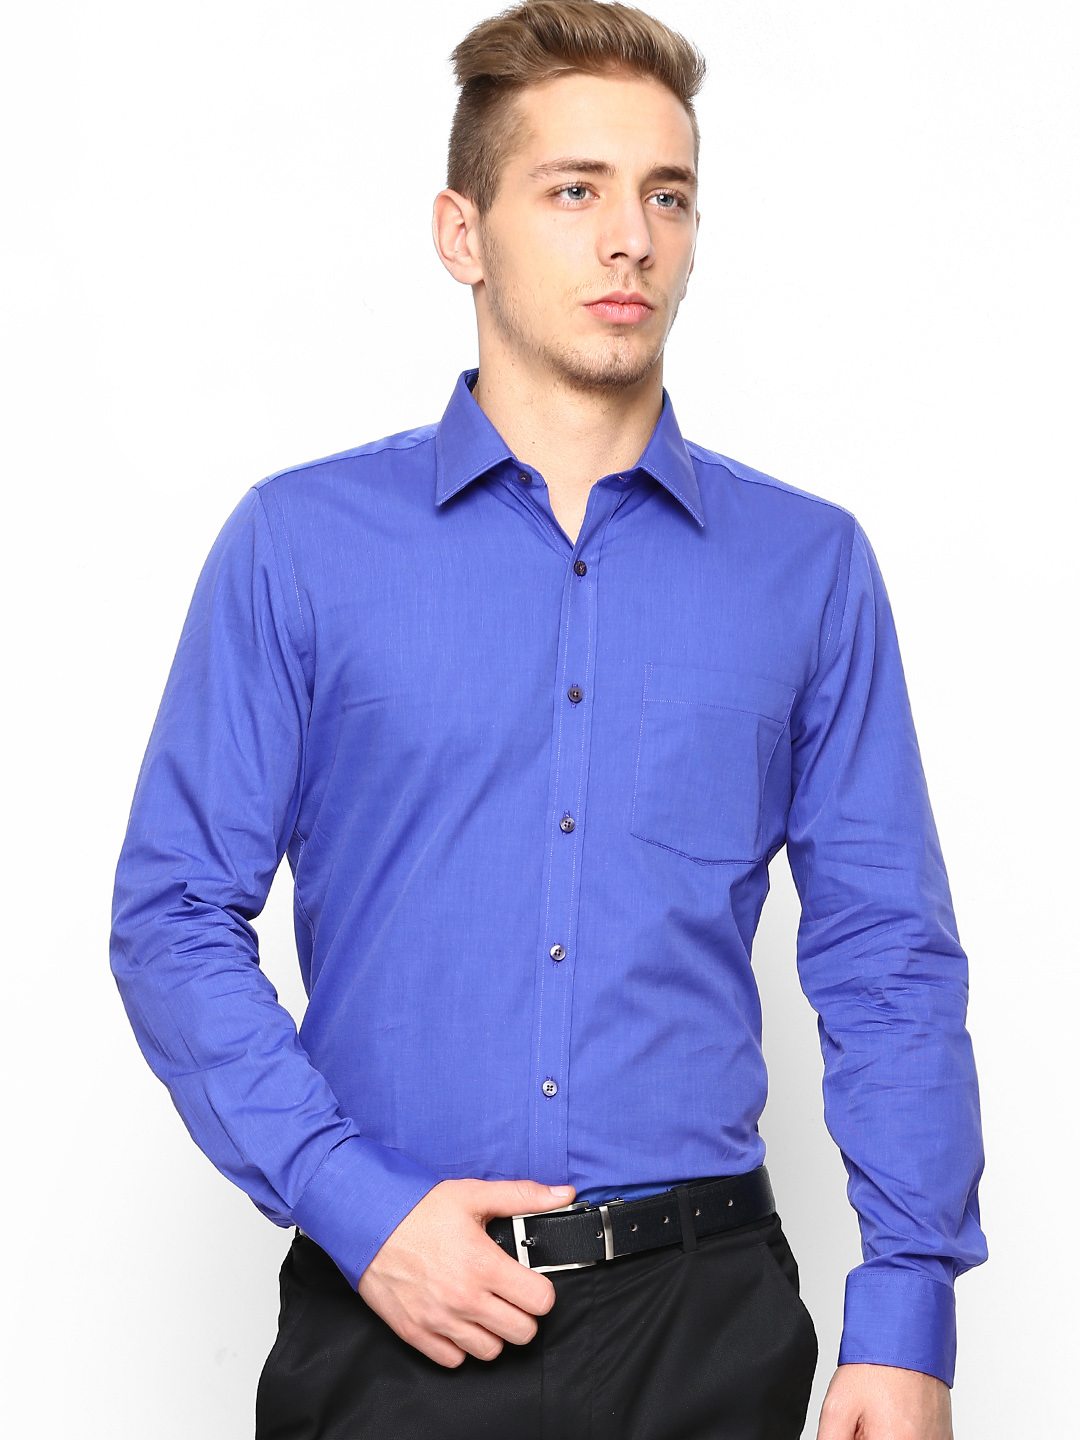 Buy Blue formal shirt for men Online @ ₹295 from ShopClues